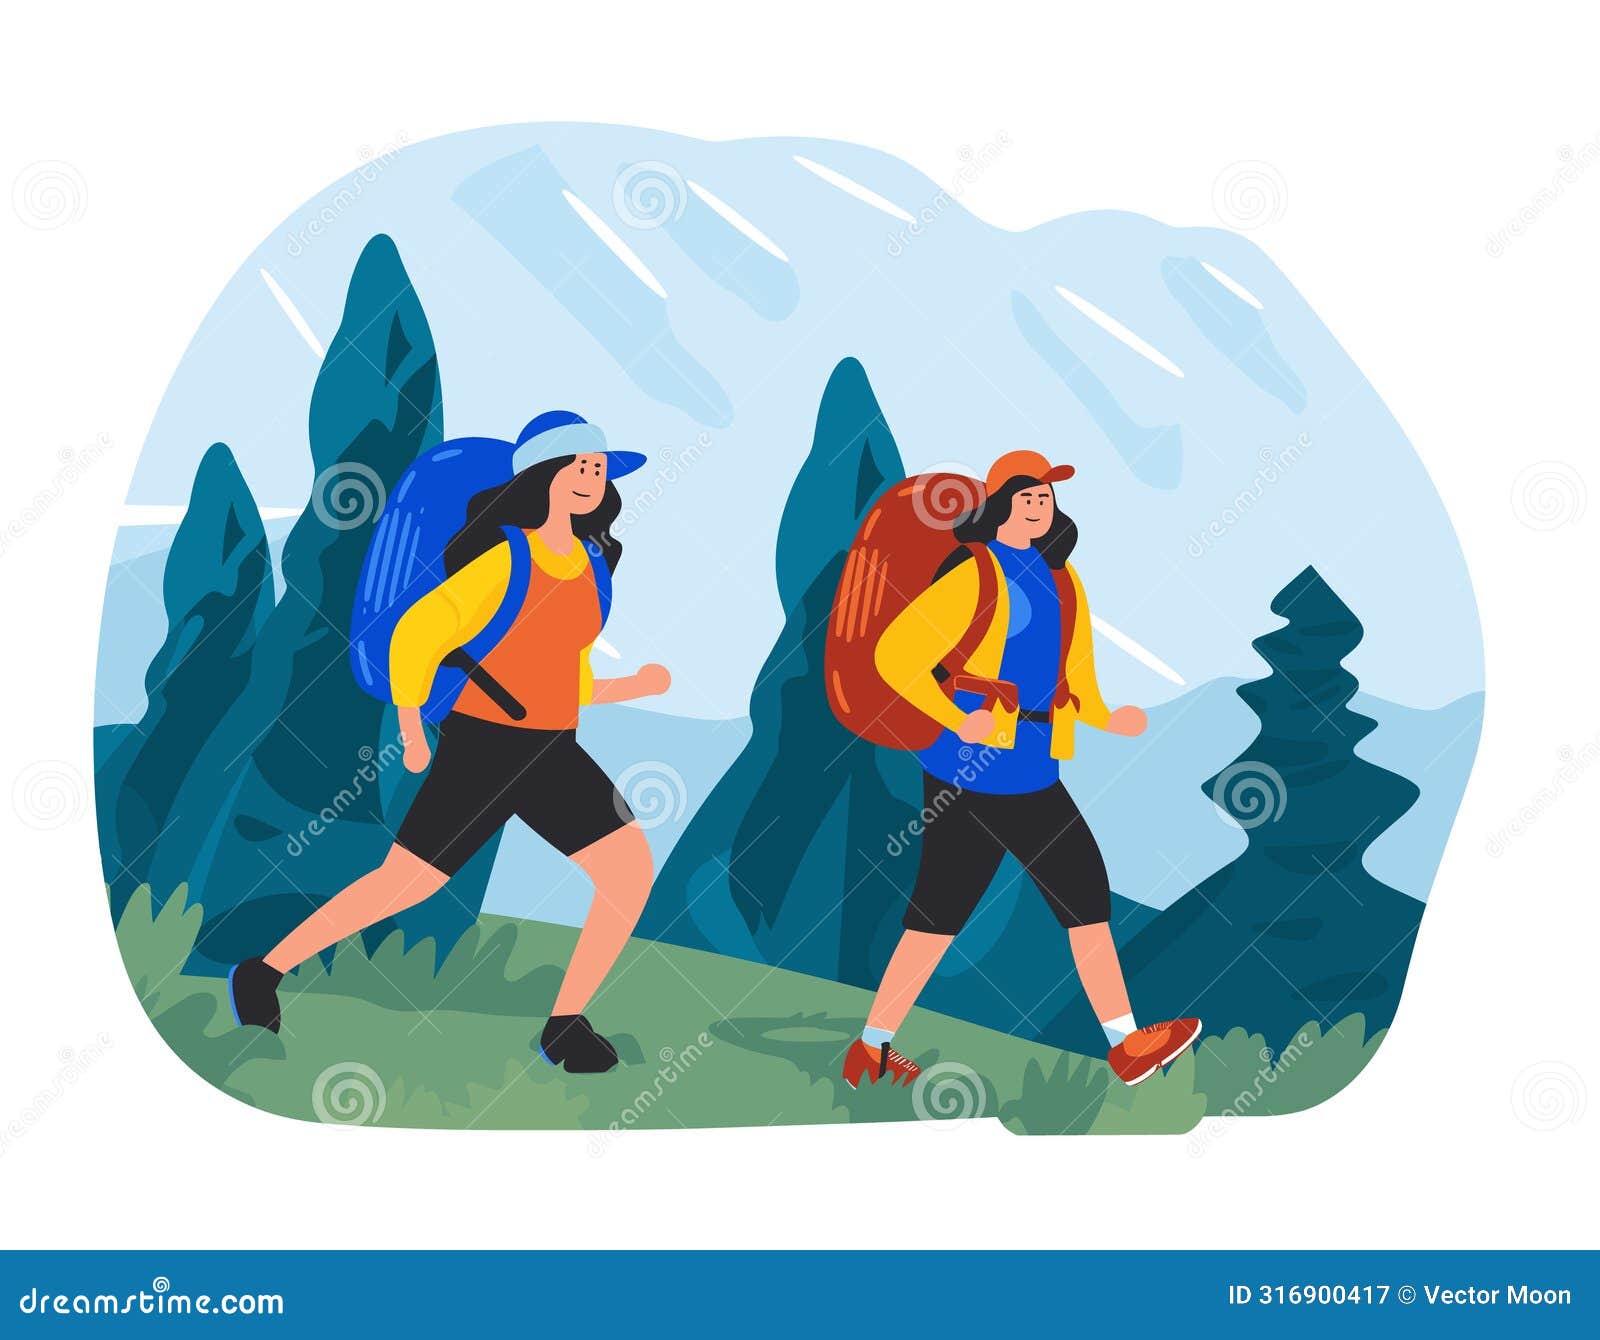 two female hikers trekking through mountainous landscape, enjoying outdoor adventure, dressed